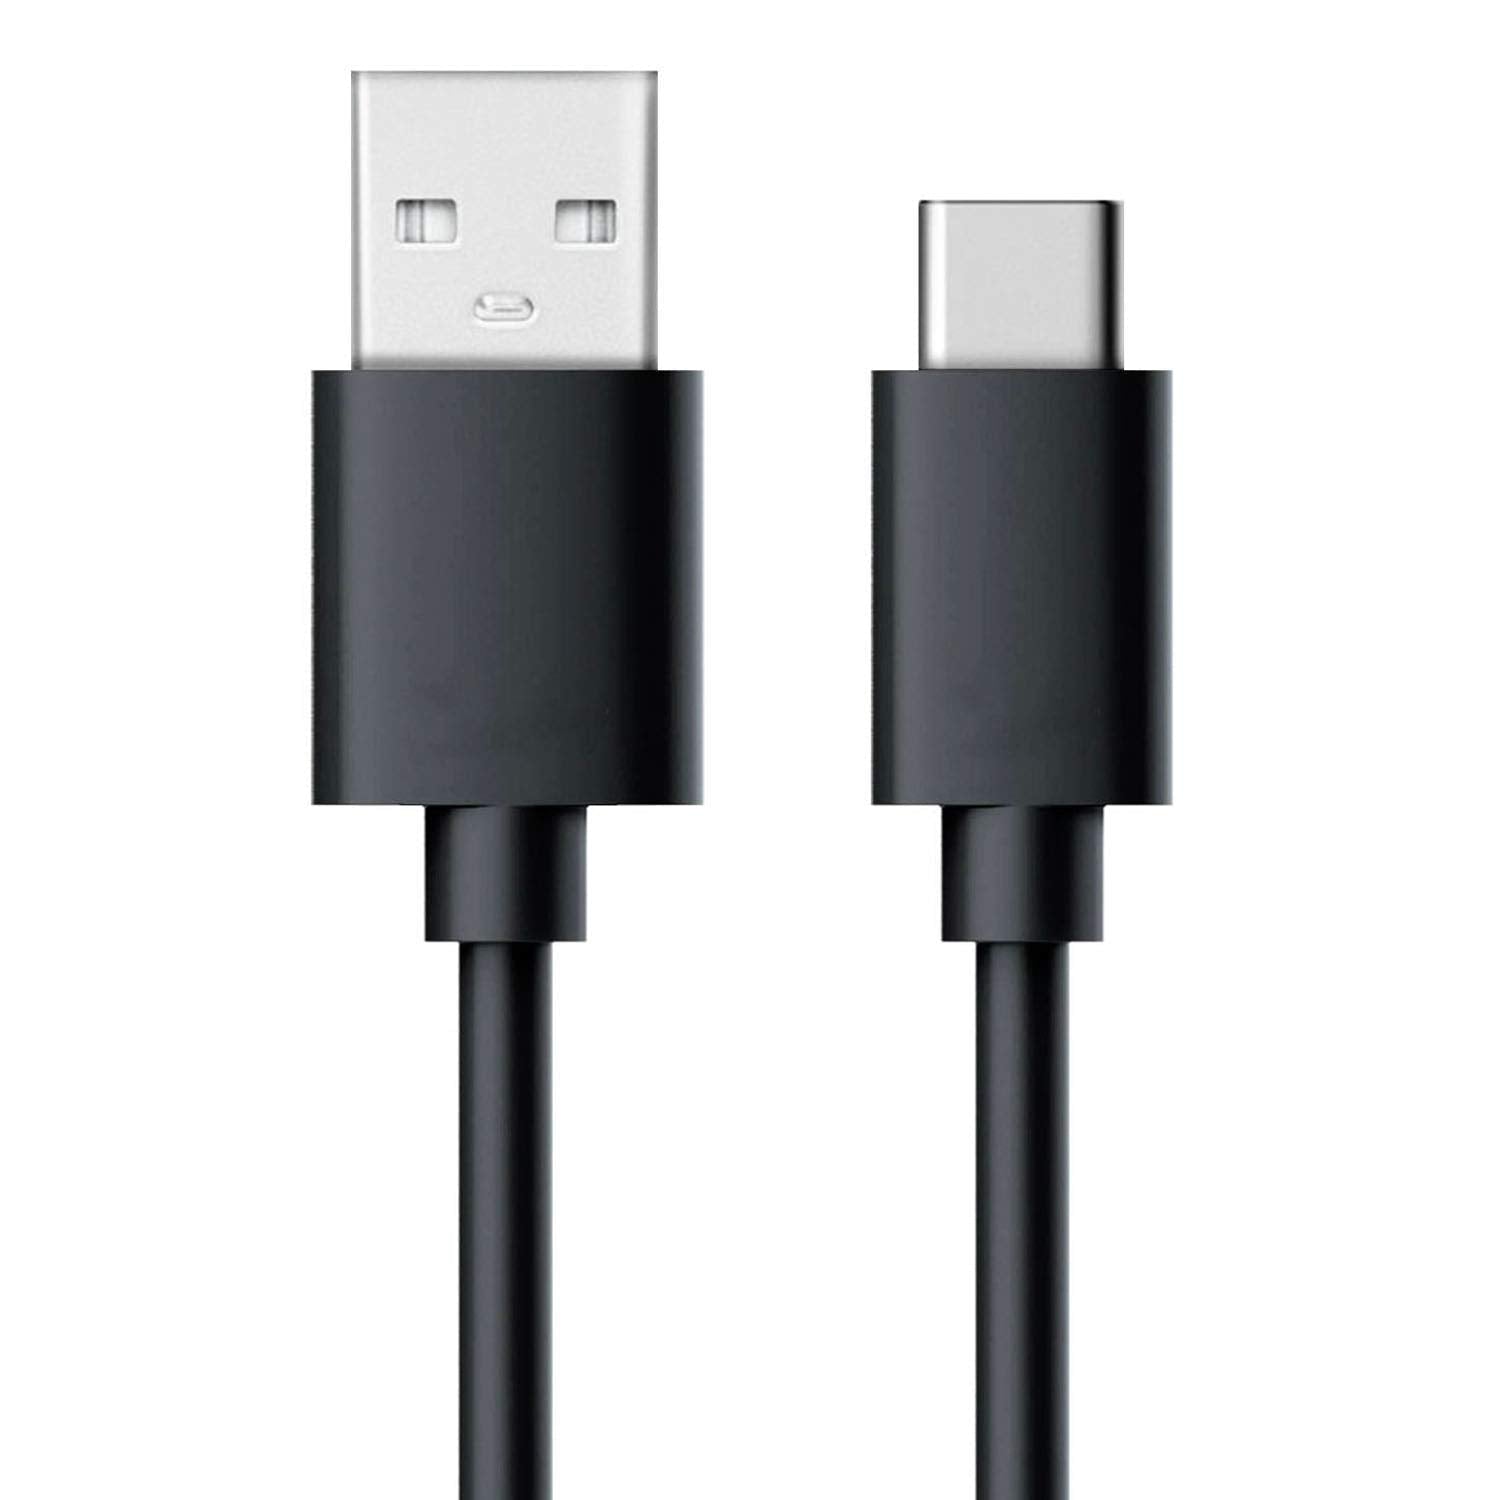 Mi Redmi Note 7 Fast Charging Type-C Data Cable Black -1 Meter